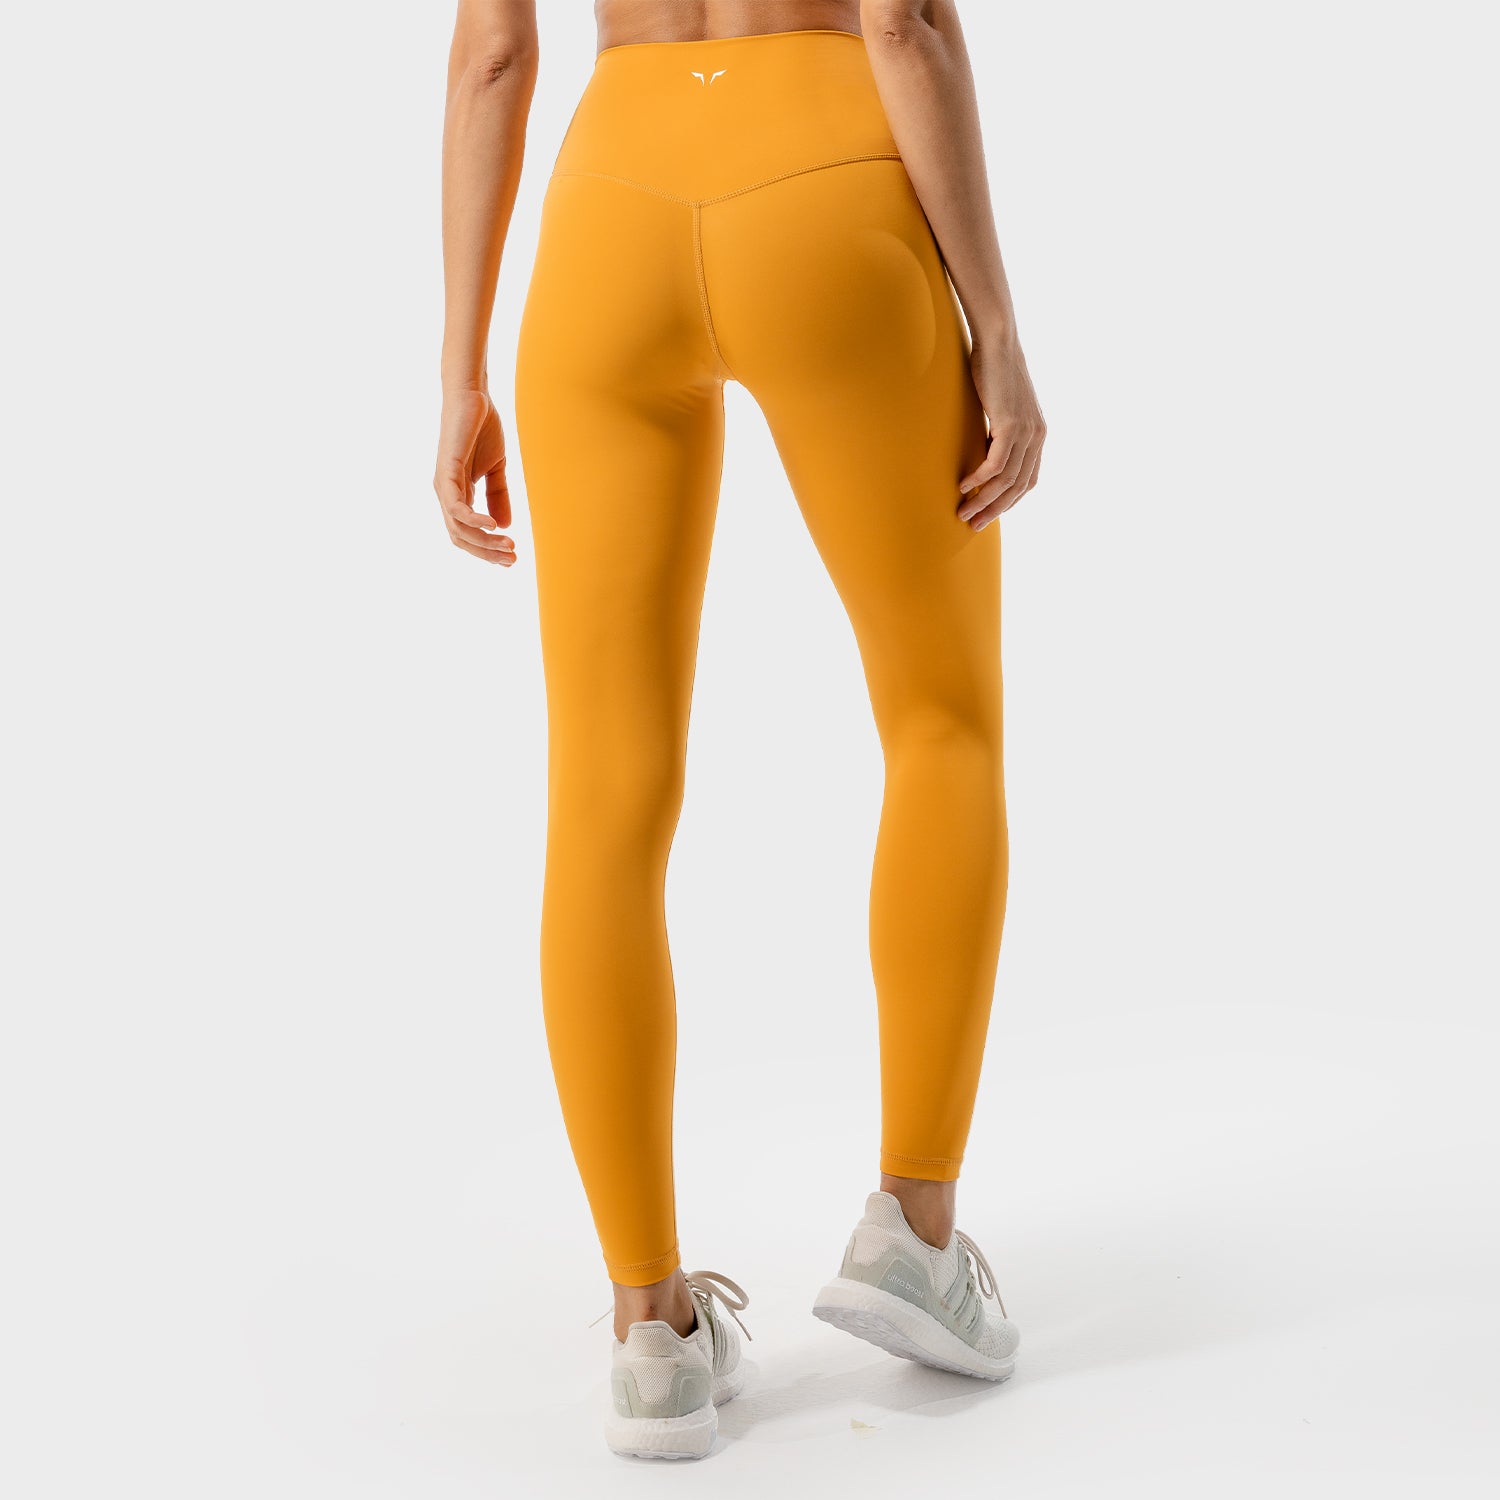 squatwolf-gym-leggings-for-women-core-agile-leggings-sunrise-yellow-workout-clothes